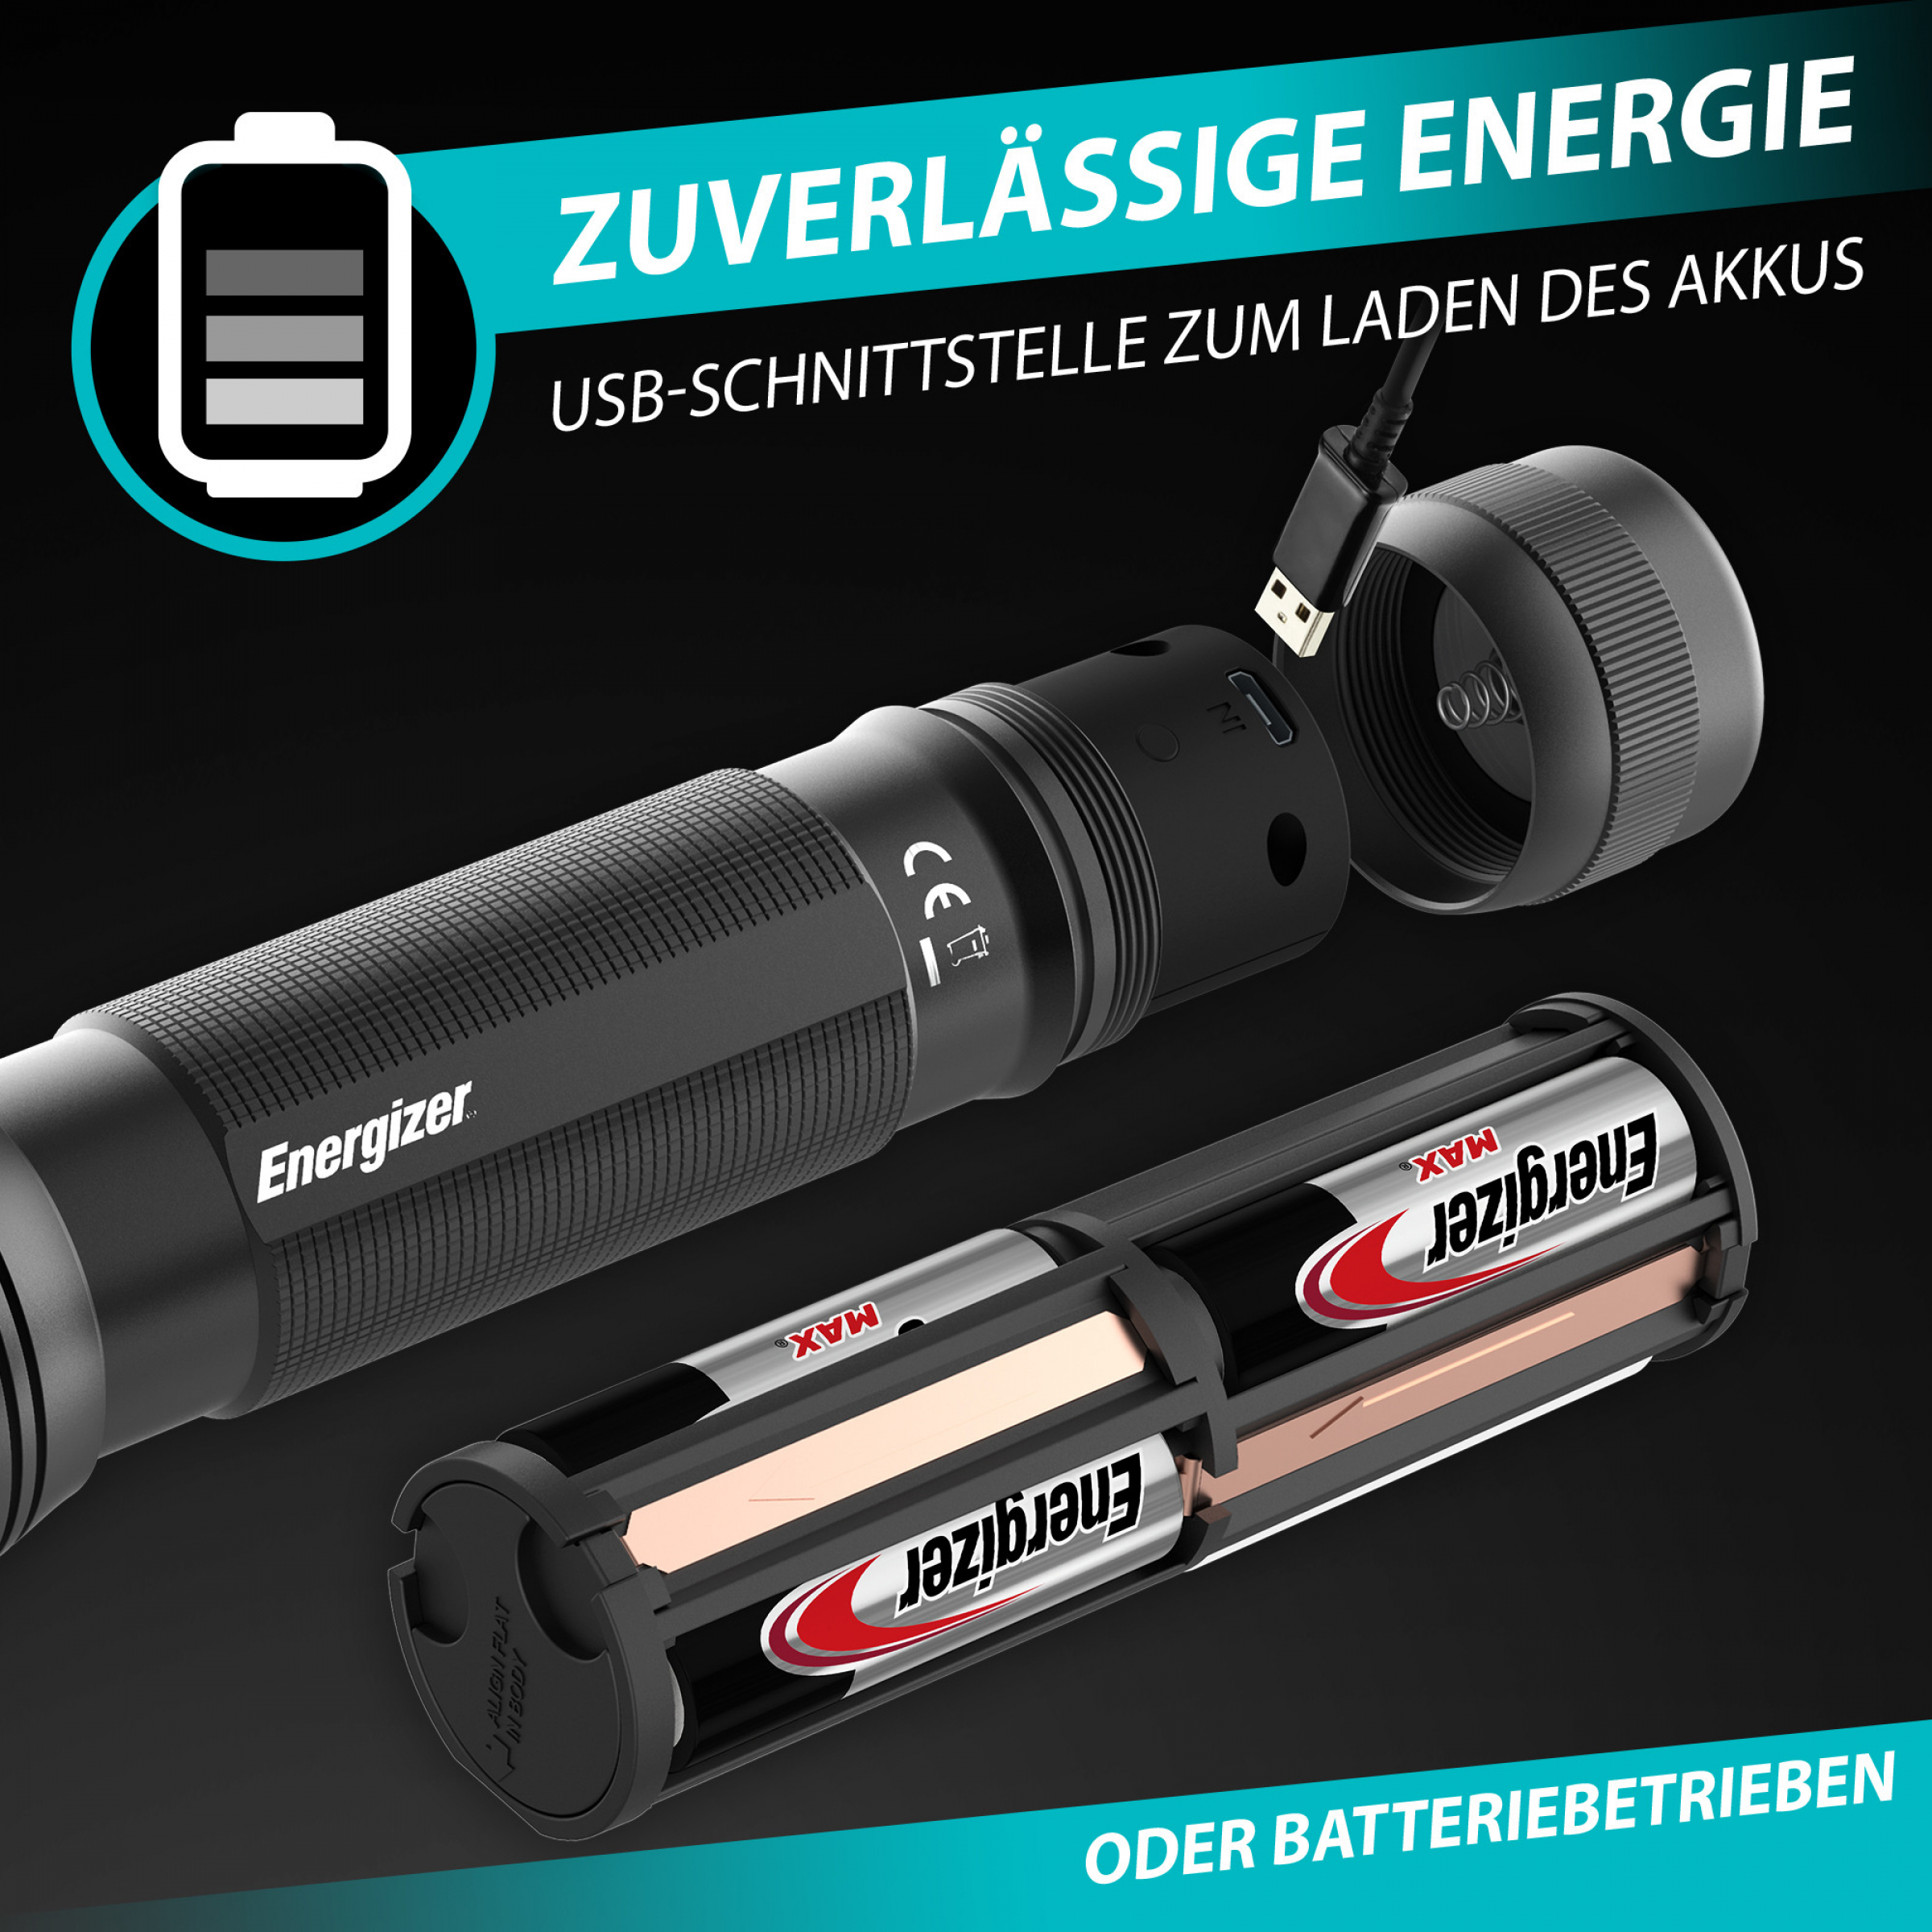 Energizer Hybrid Tactical Metal - 1200 Lumen inkl. rechargeable battery